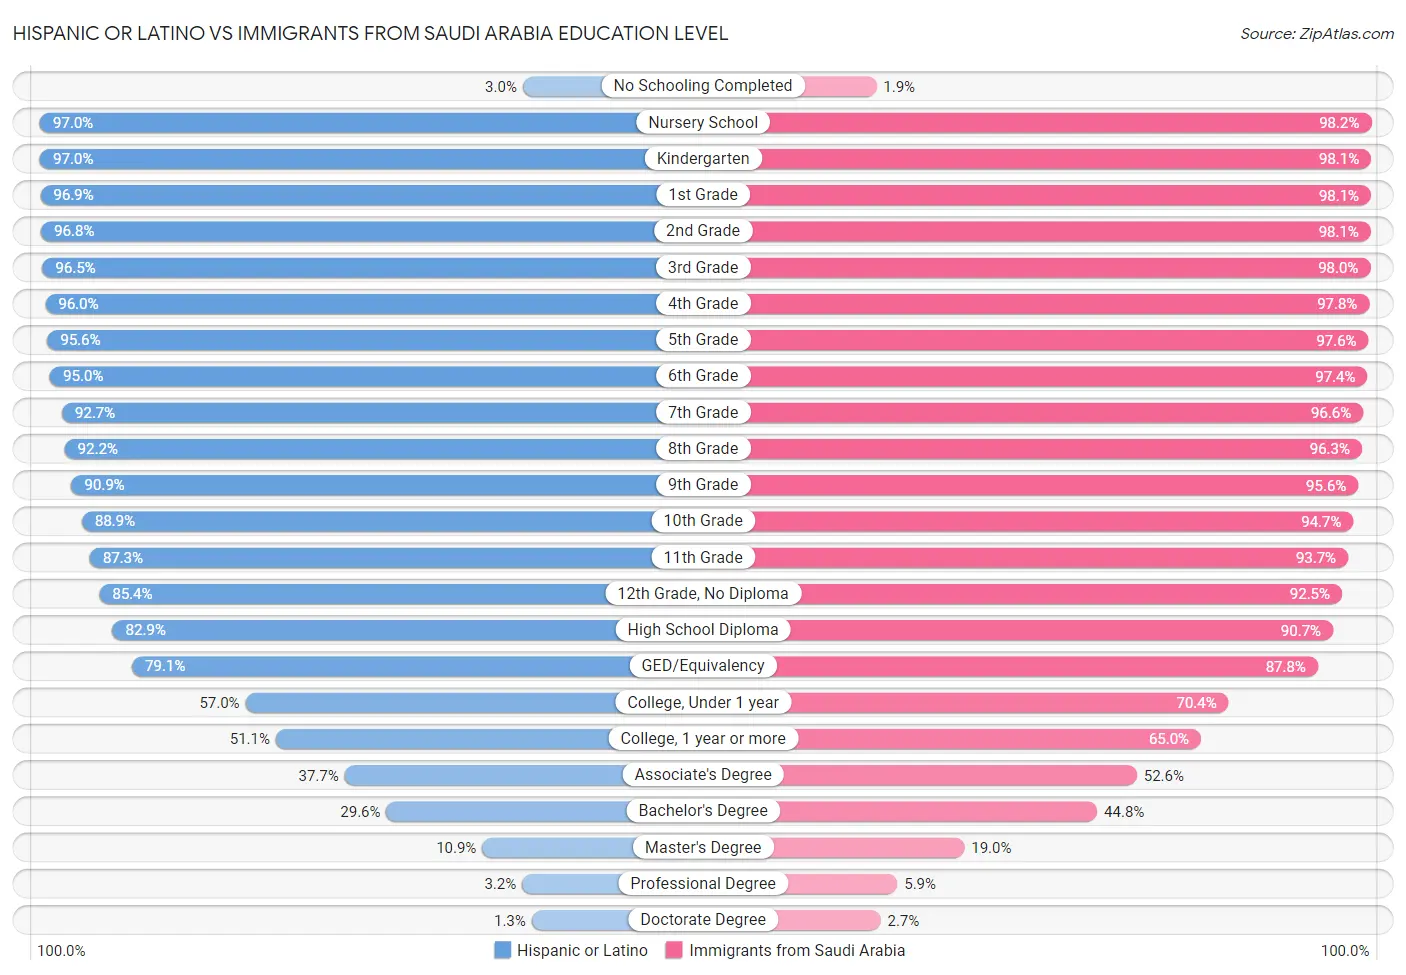 Hispanic or Latino vs Immigrants from Saudi Arabia Education Level